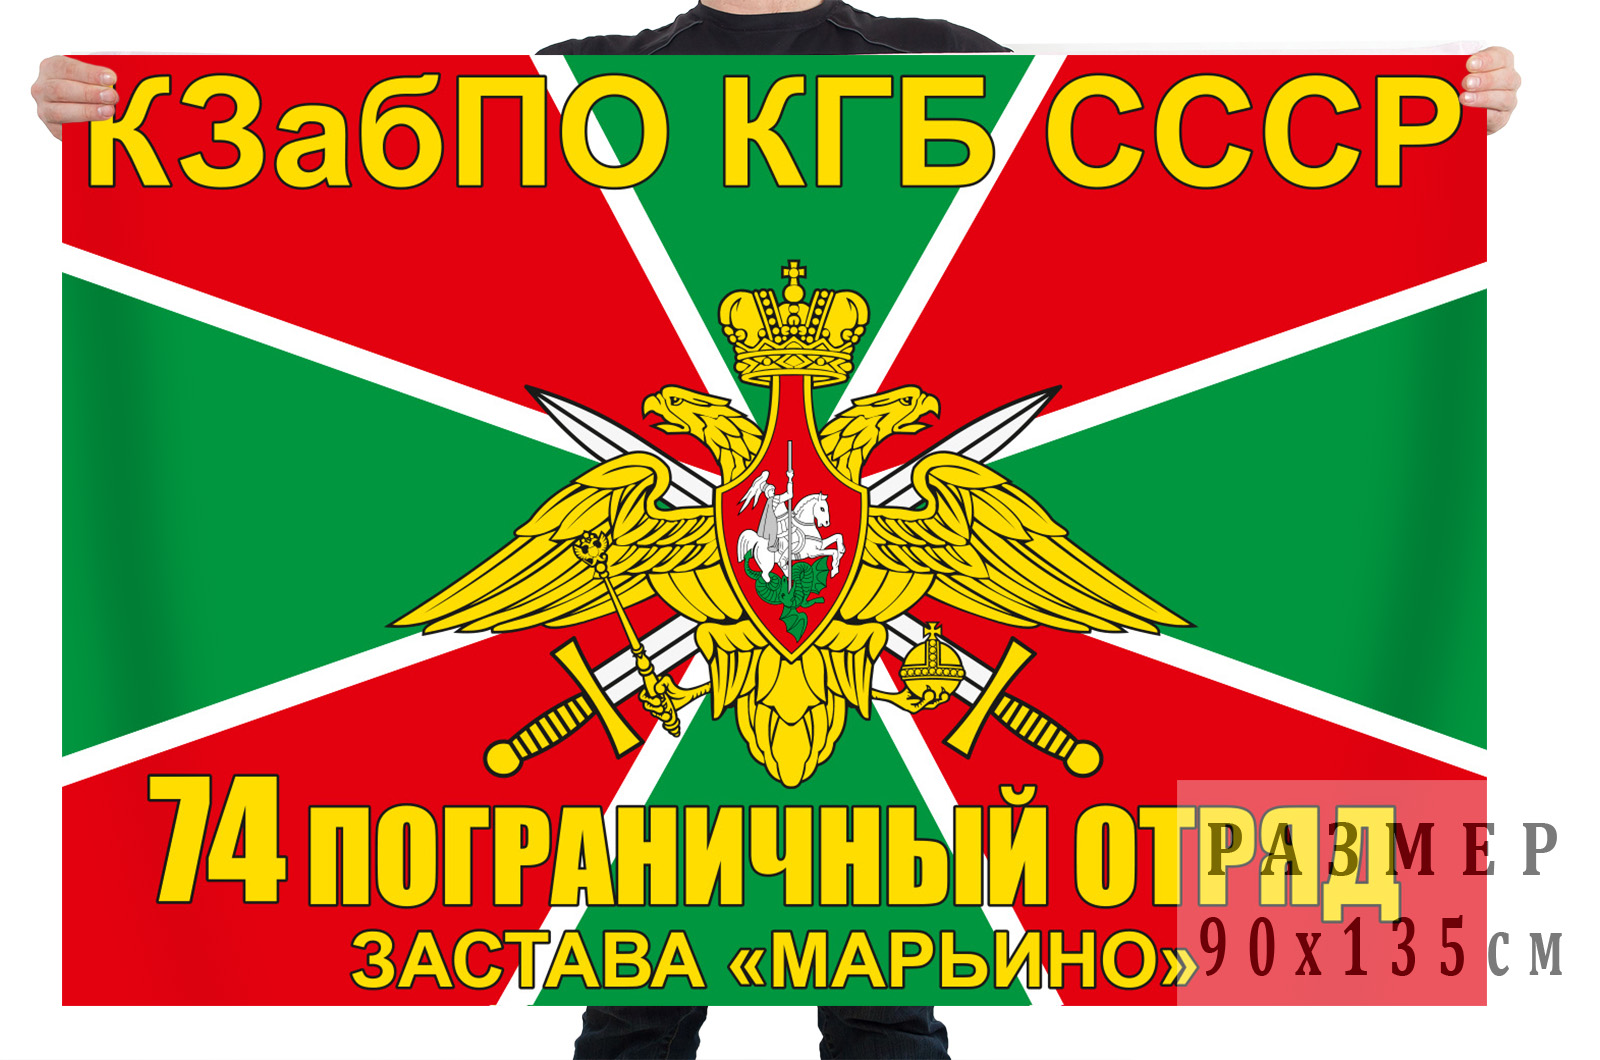 Флаг 74 пограничного отряда КЗабПО